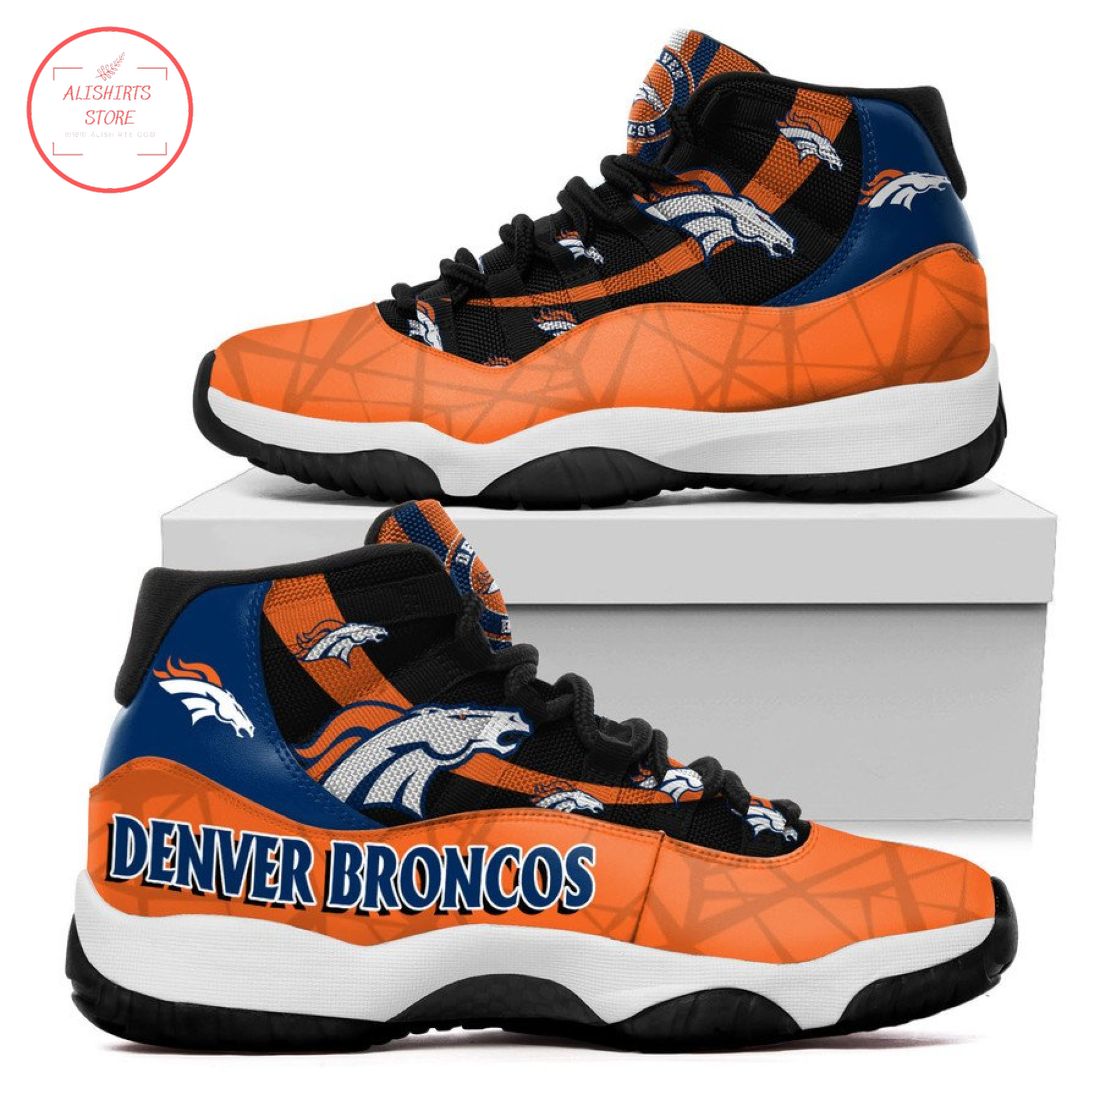 NFL Denver Broncos New Air Jordan 11 Sneakers Shoes